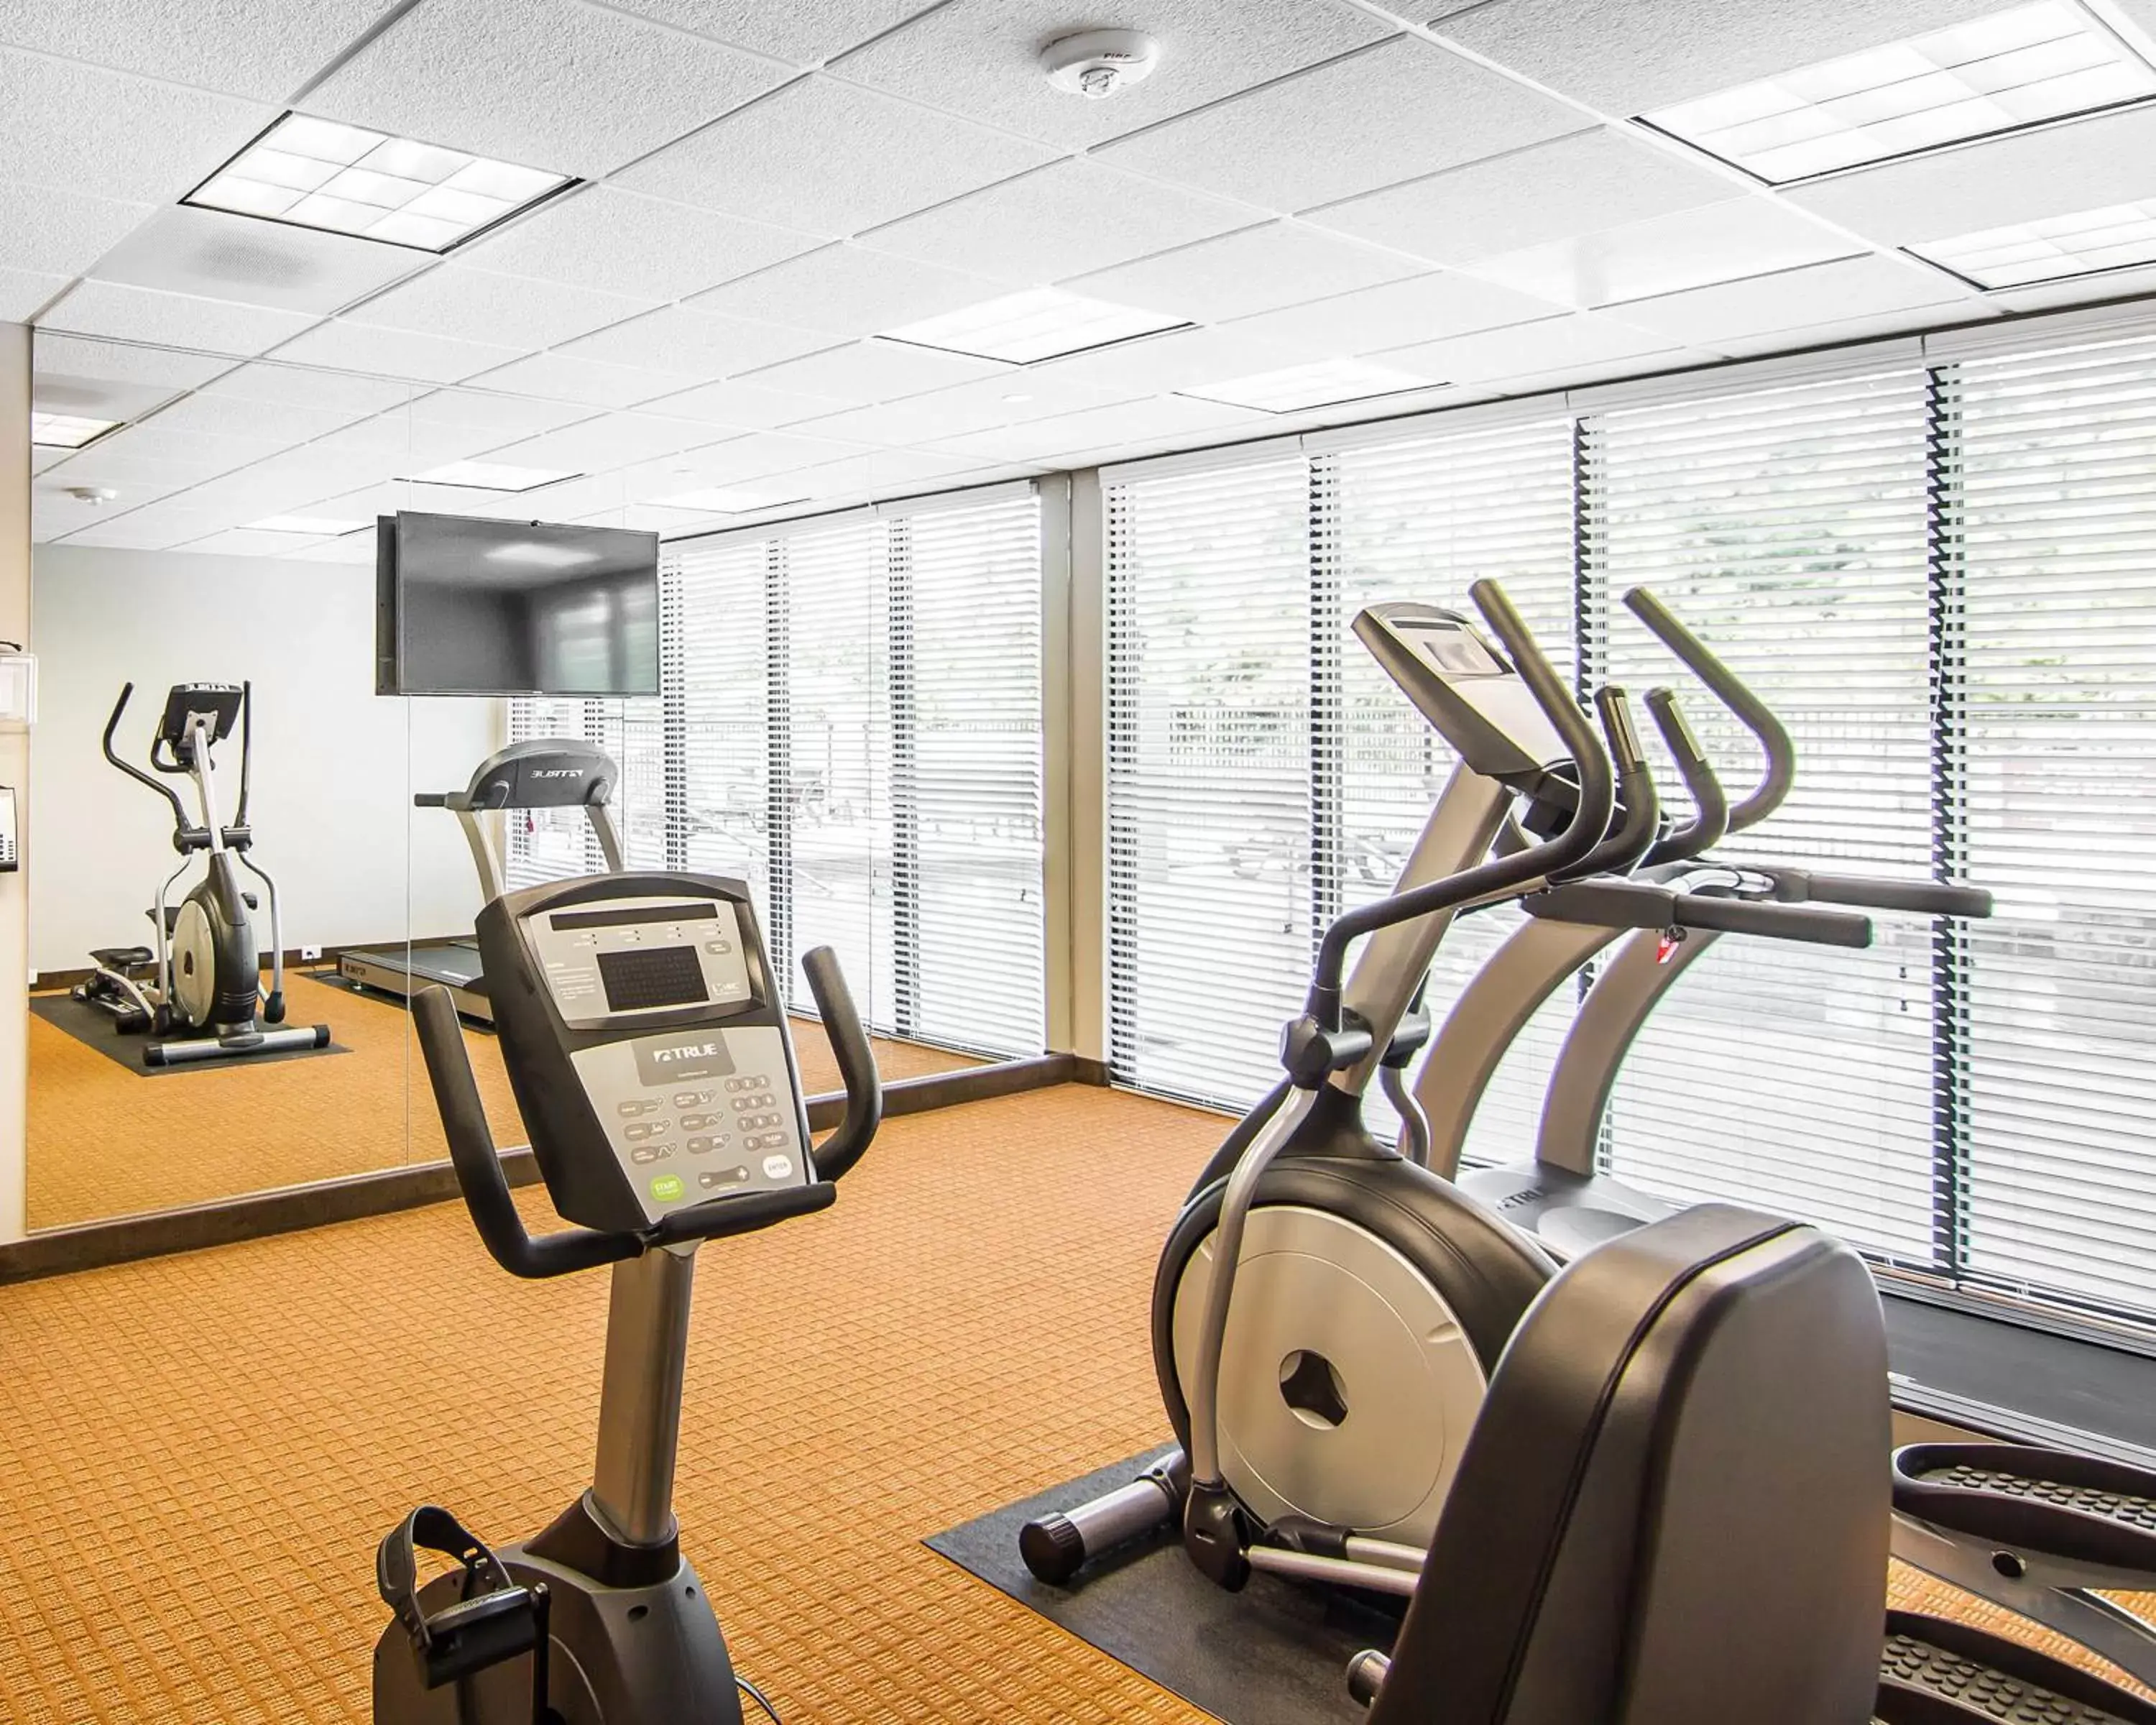 Fitness centre/facilities, Fitness Center/Facilities in Sleep Inn Lufkin